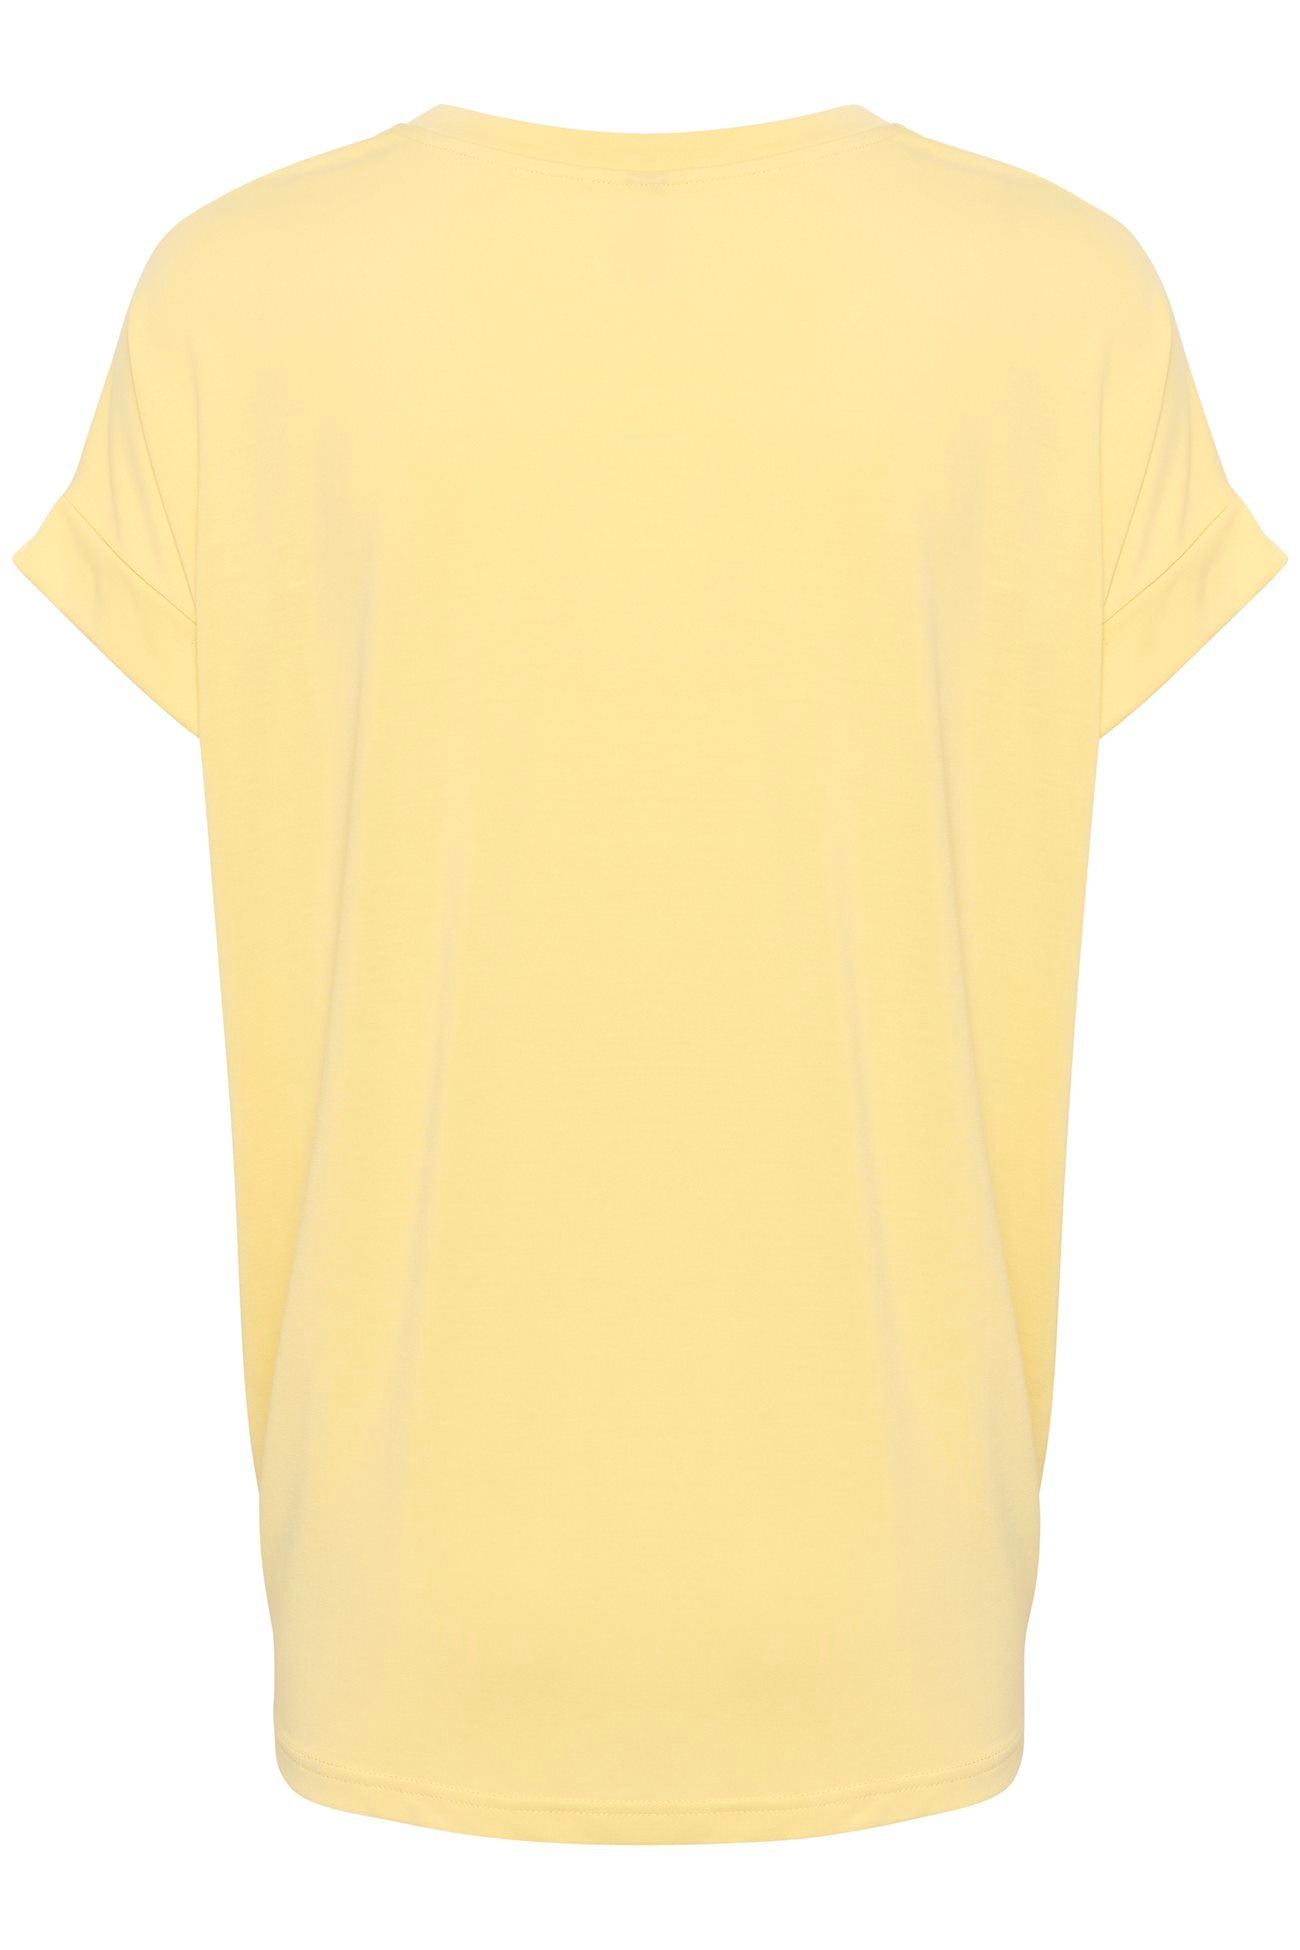 Kajsa T-shirt by Culture - pineapple - Blue Sky Fashions & Lingerie